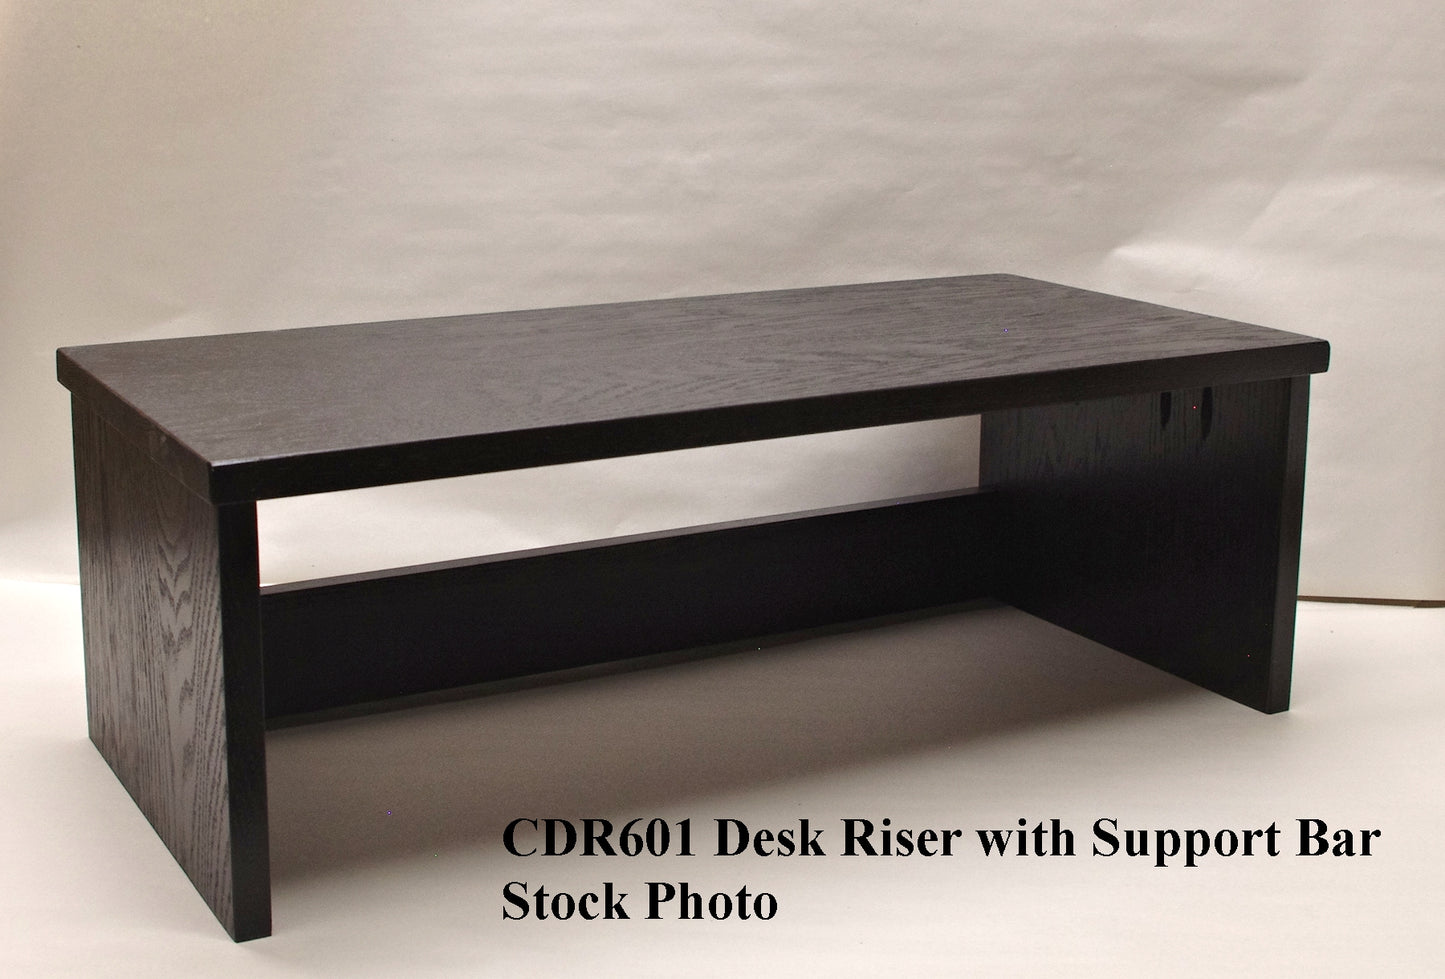 CDR601 Desk Riser with Support Bar - 29" Length